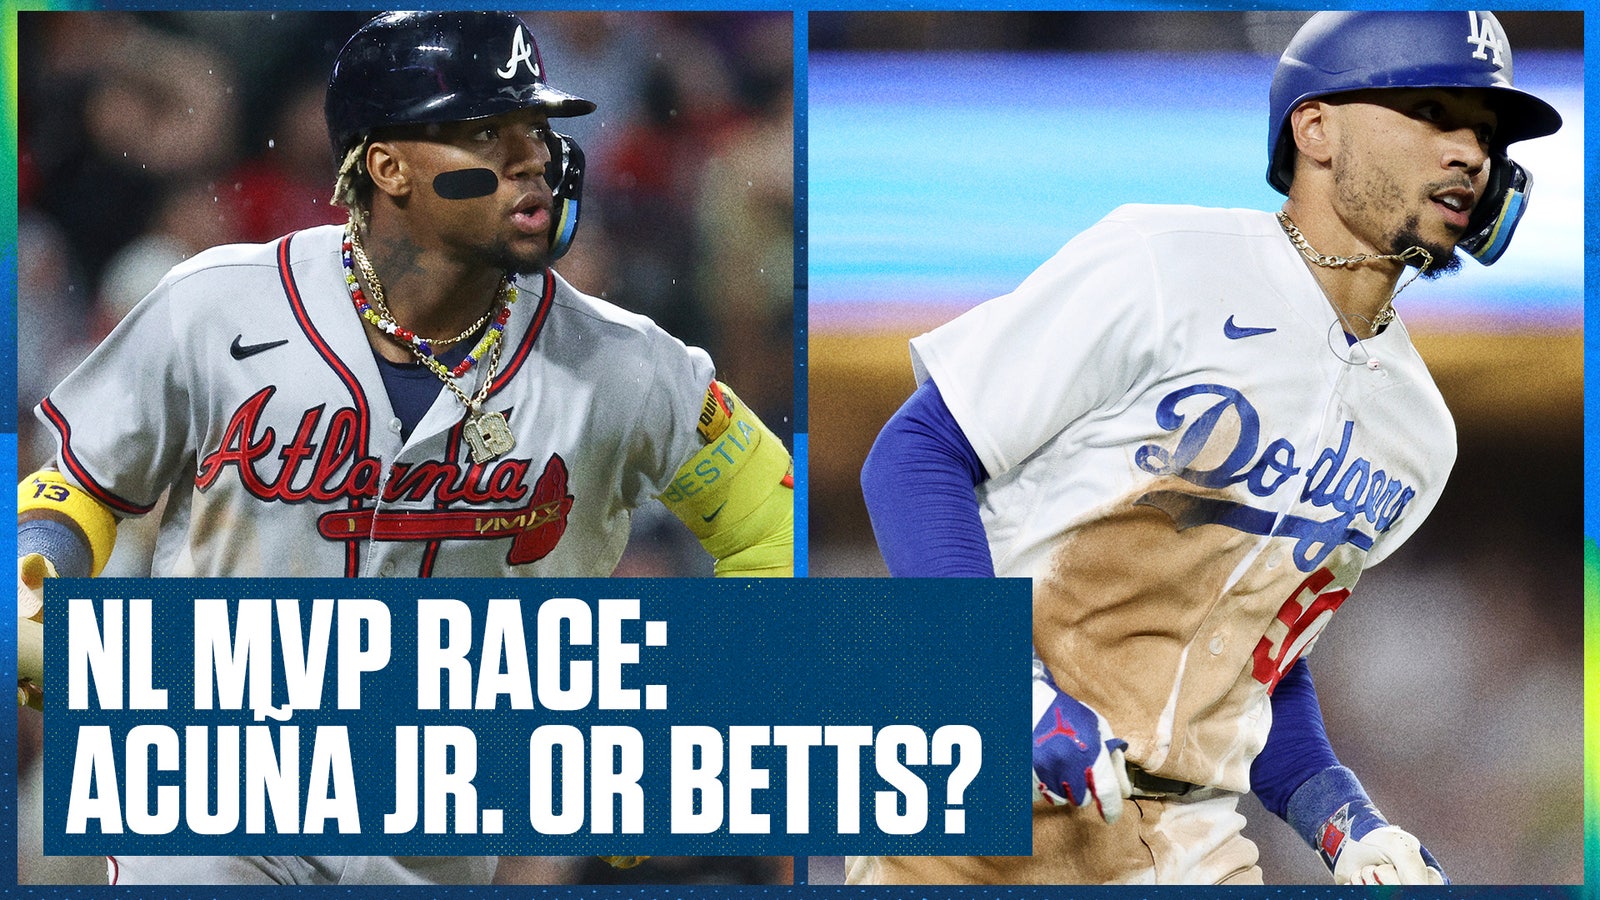 Atlanta Braves' Ronald Acuña Jr. or Los Angeles Dodgers' Mookie Betts for NL MVP?